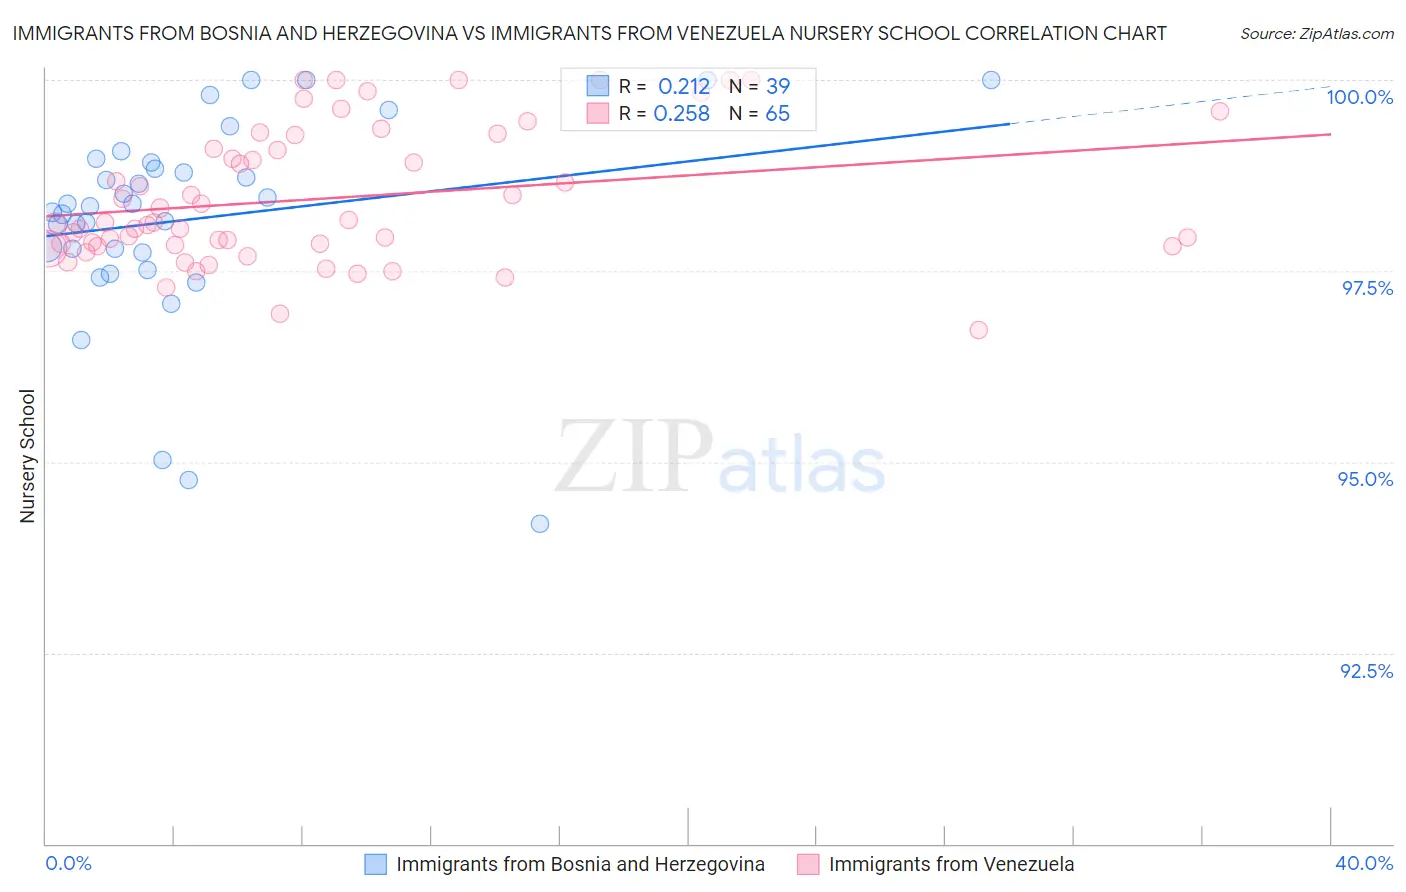 Immigrants from Bosnia and Herzegovina vs Immigrants from Venezuela Nursery School